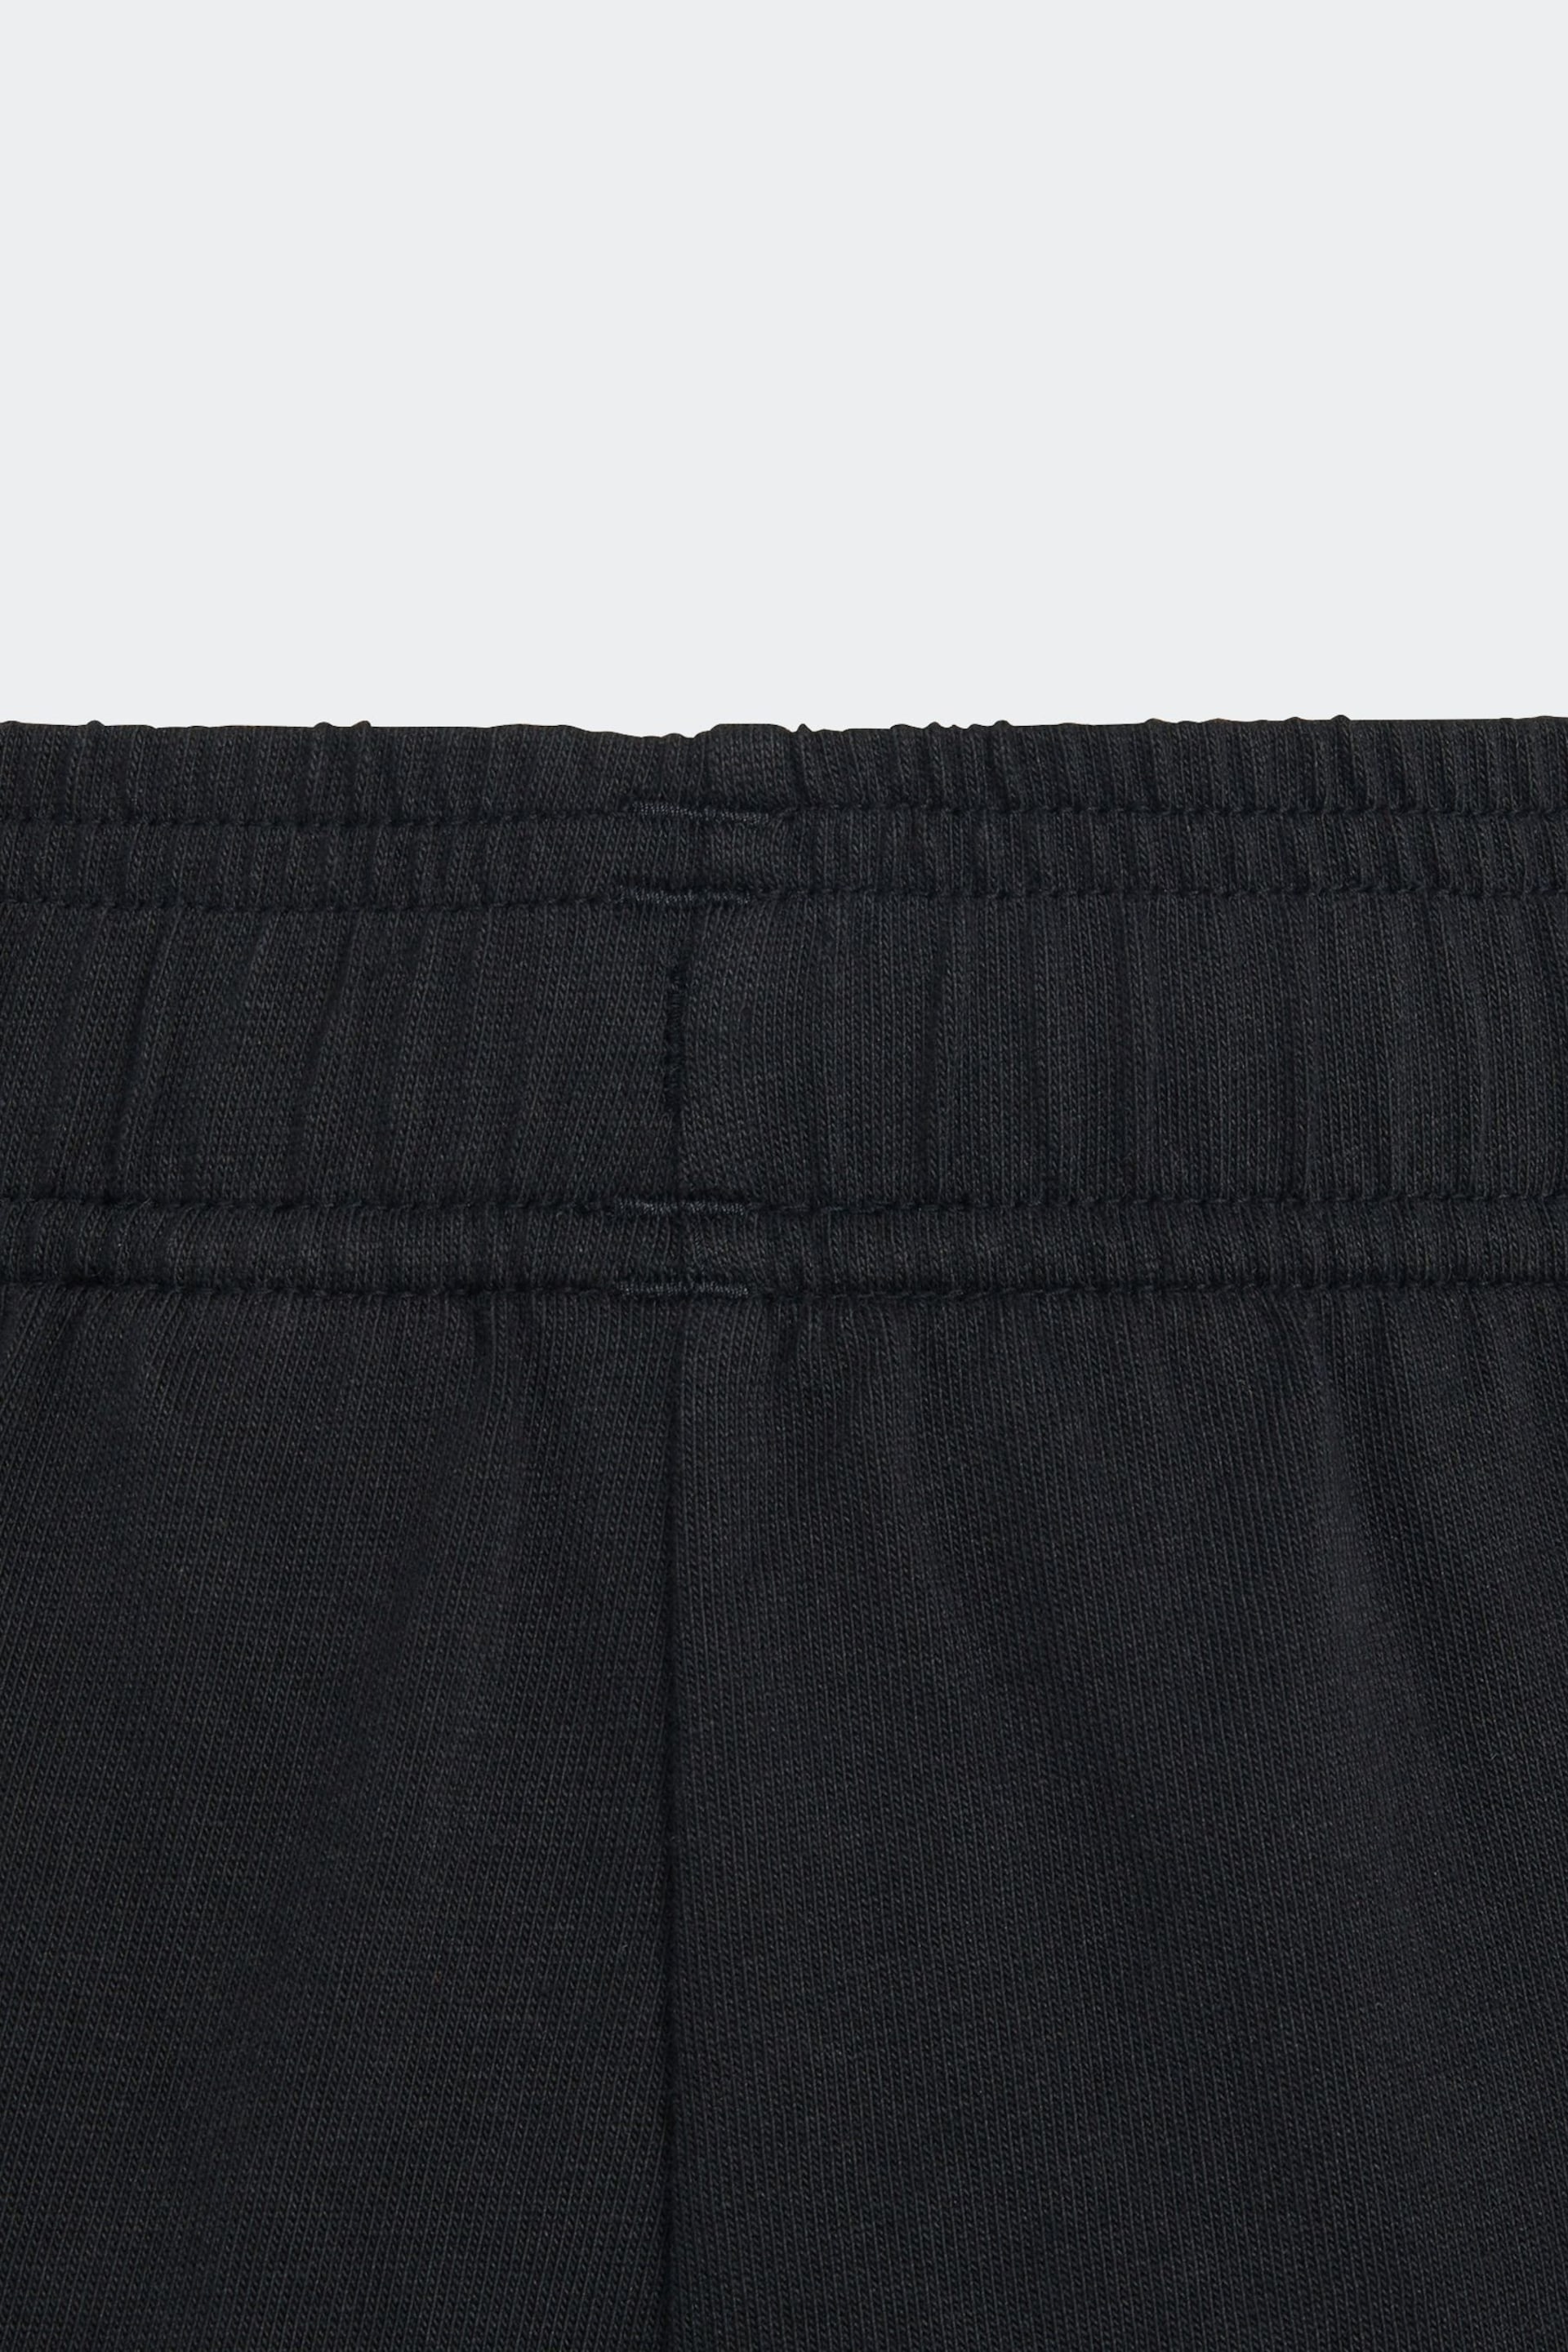 adidas Black Sportswear Essentials Big Logo Cotton Shorts - Image 5 of 5